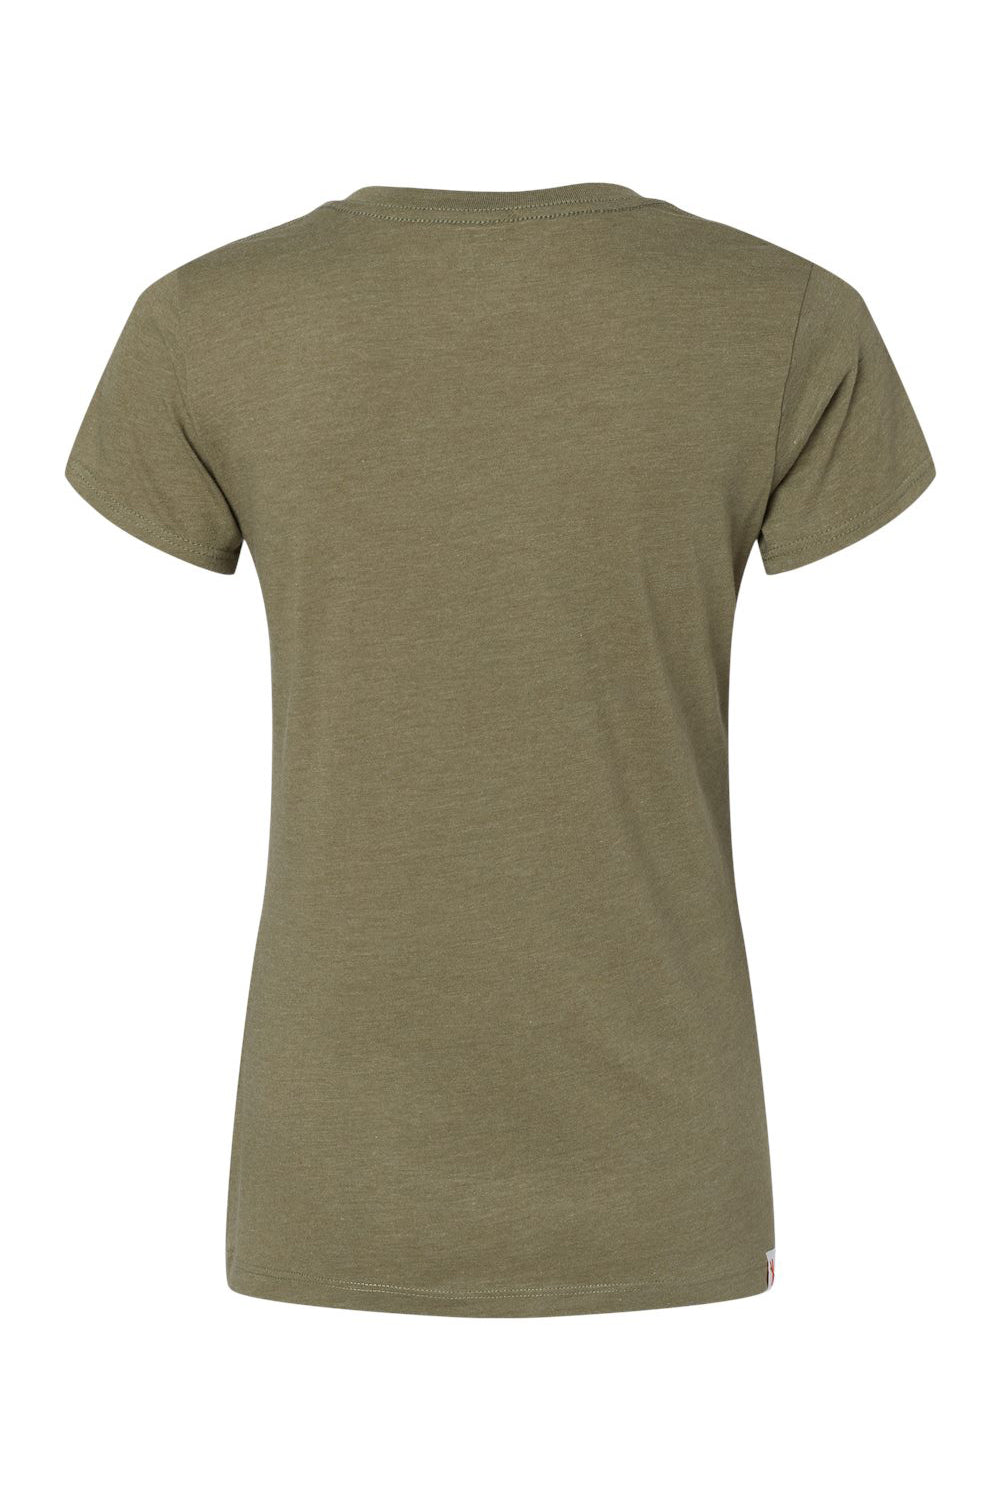 Kastlfel 2011 Womens RecycledSoft Short Sleeve V-Neck T-Shirt Moss Green Flat Back